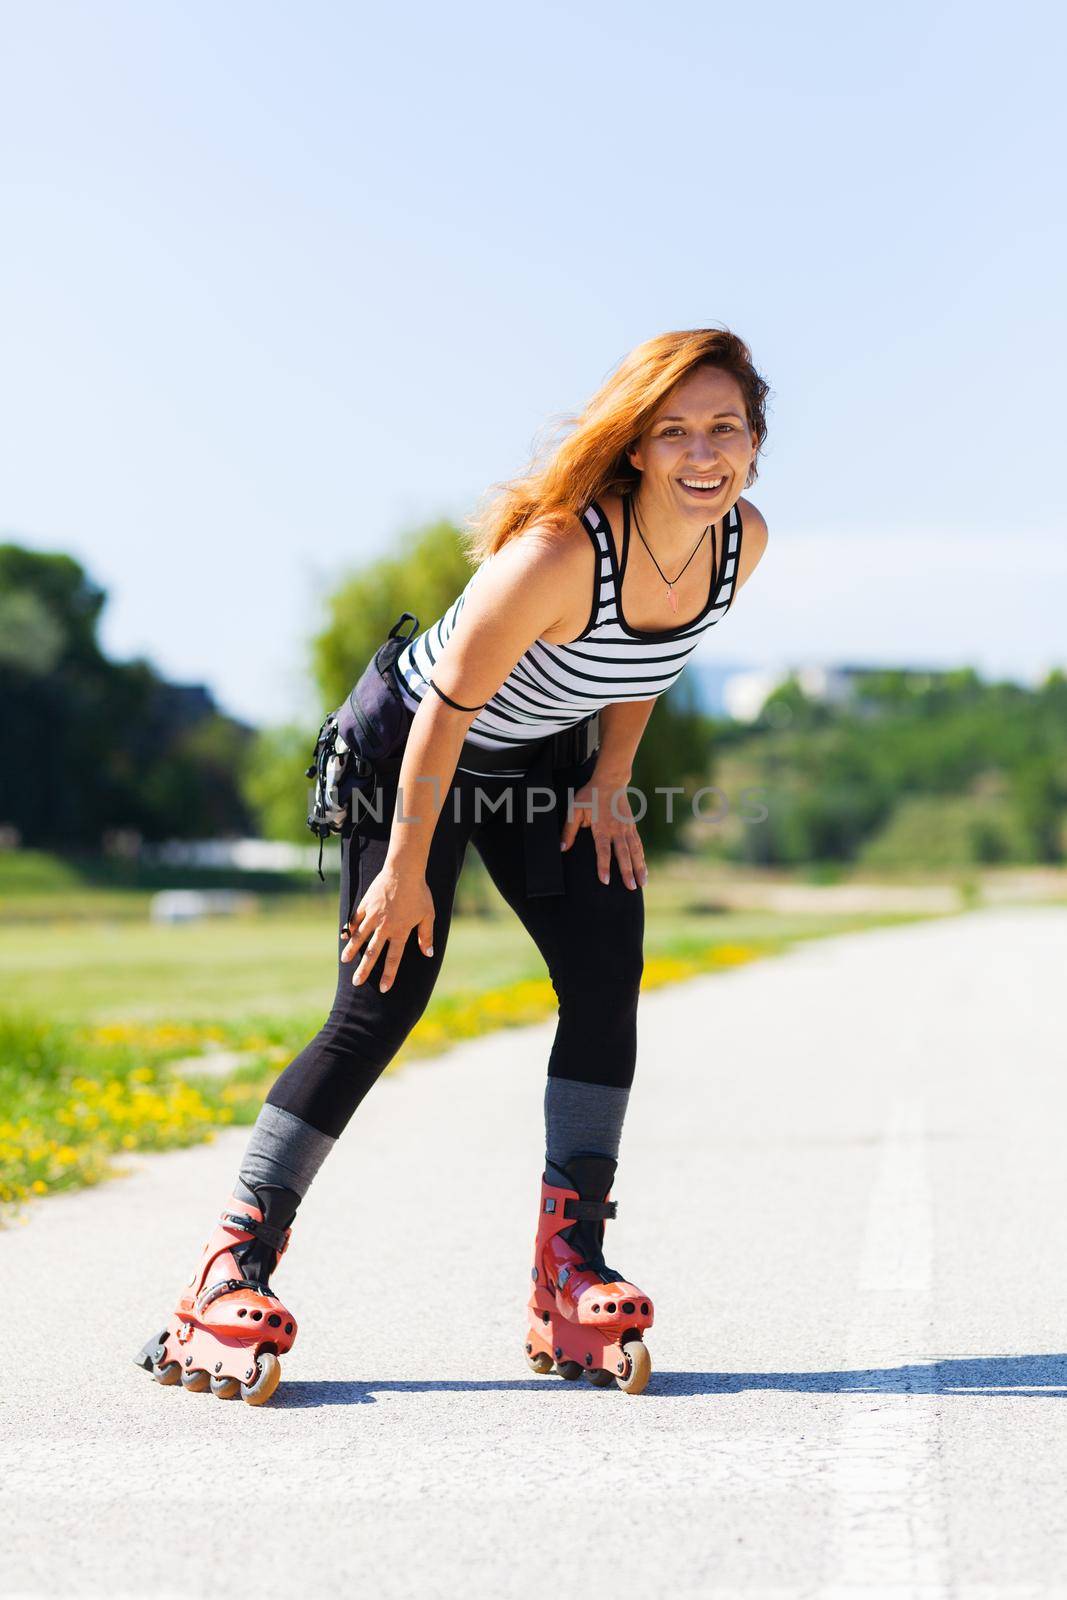 roller skating girl on asphalt road outdoors on a hot summer day